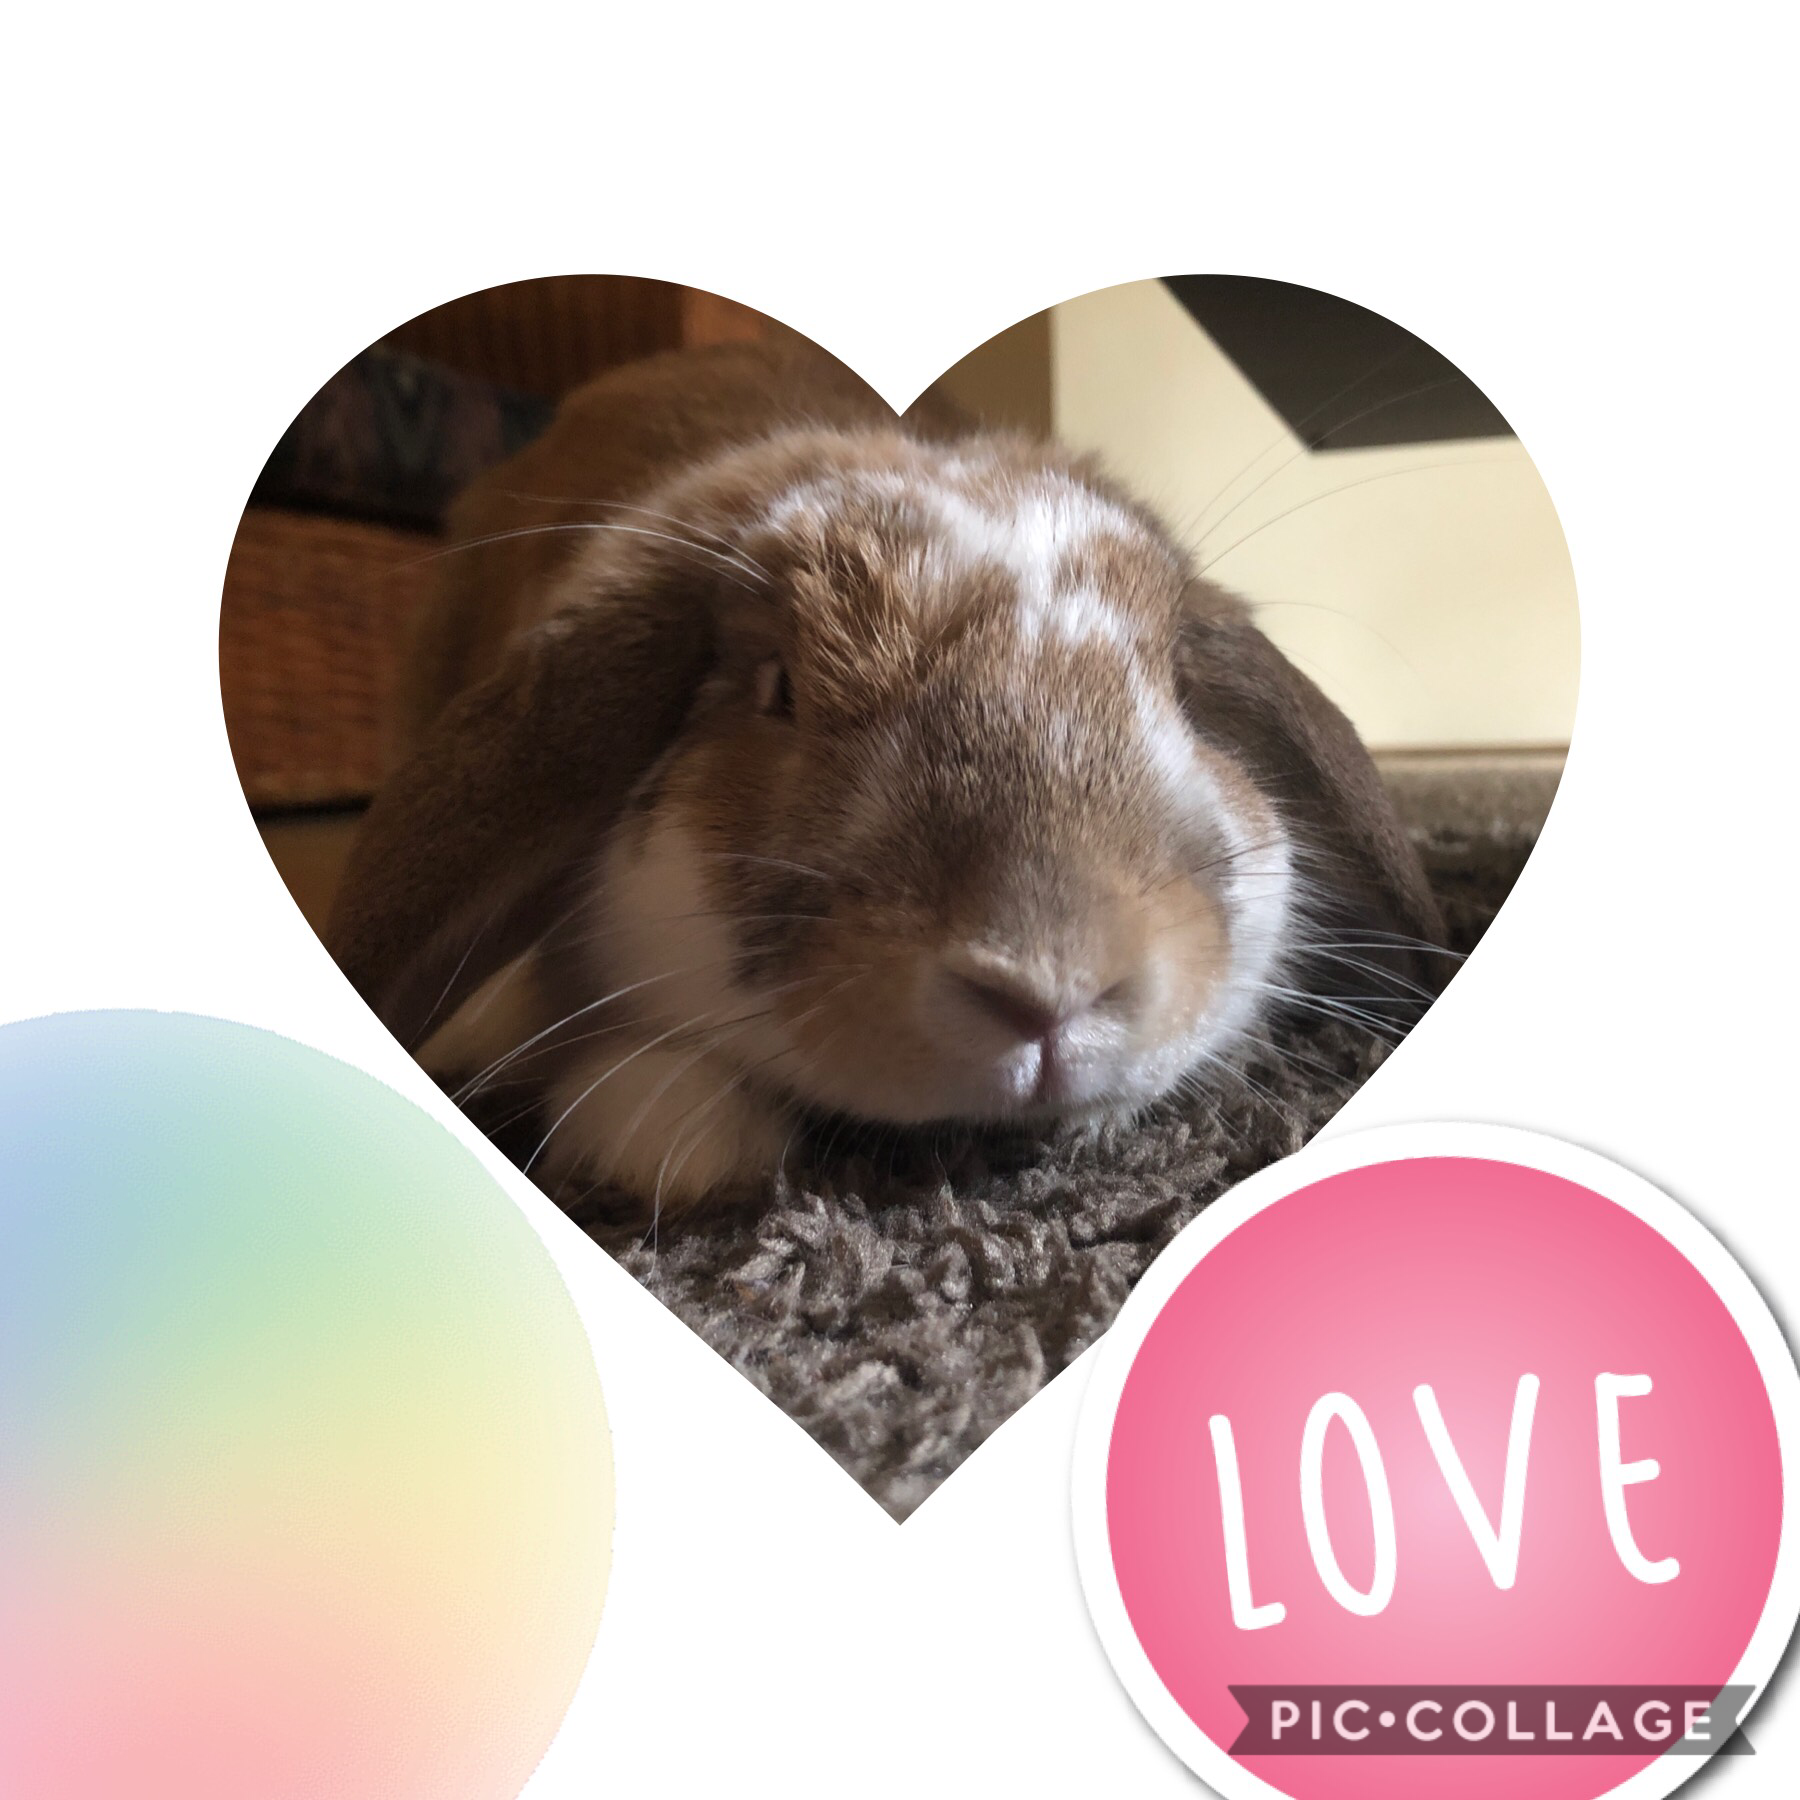 Love my rabbit